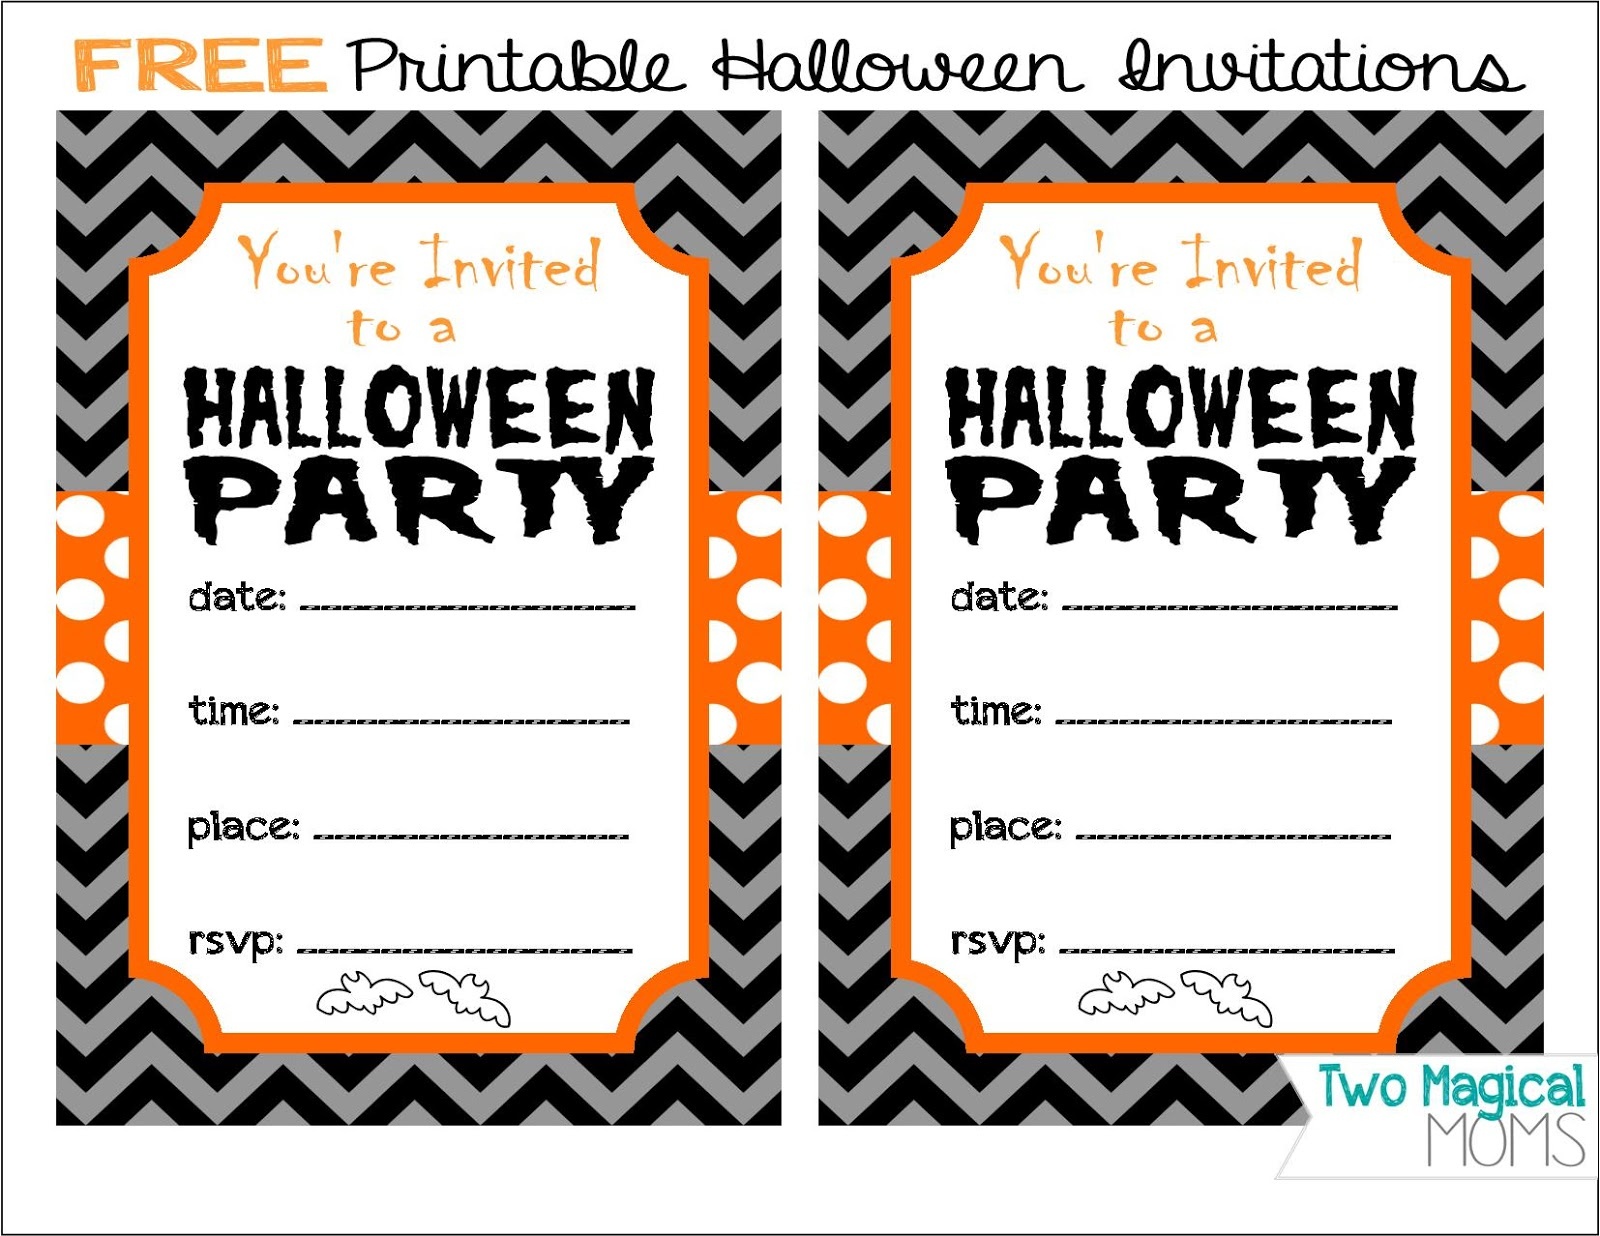 Two Magical Moms: Free Printable Halloween Invitations - Free Printable Halloween Place Cards